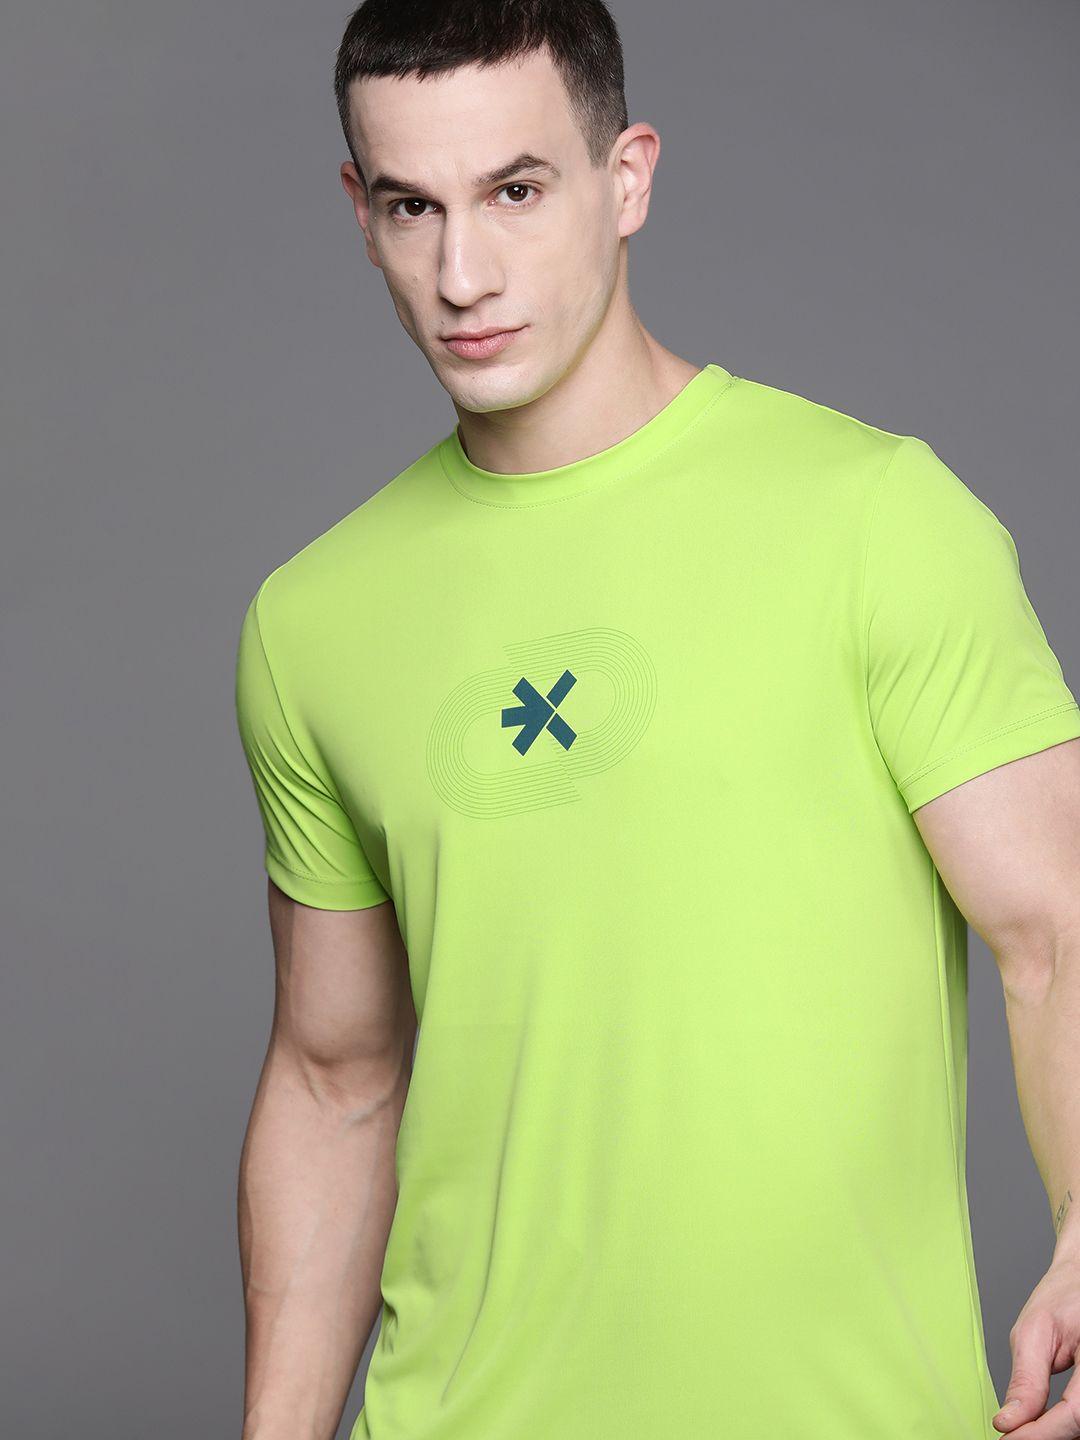 hrx by hrithik roshan printed rapid-dry running t-shirt